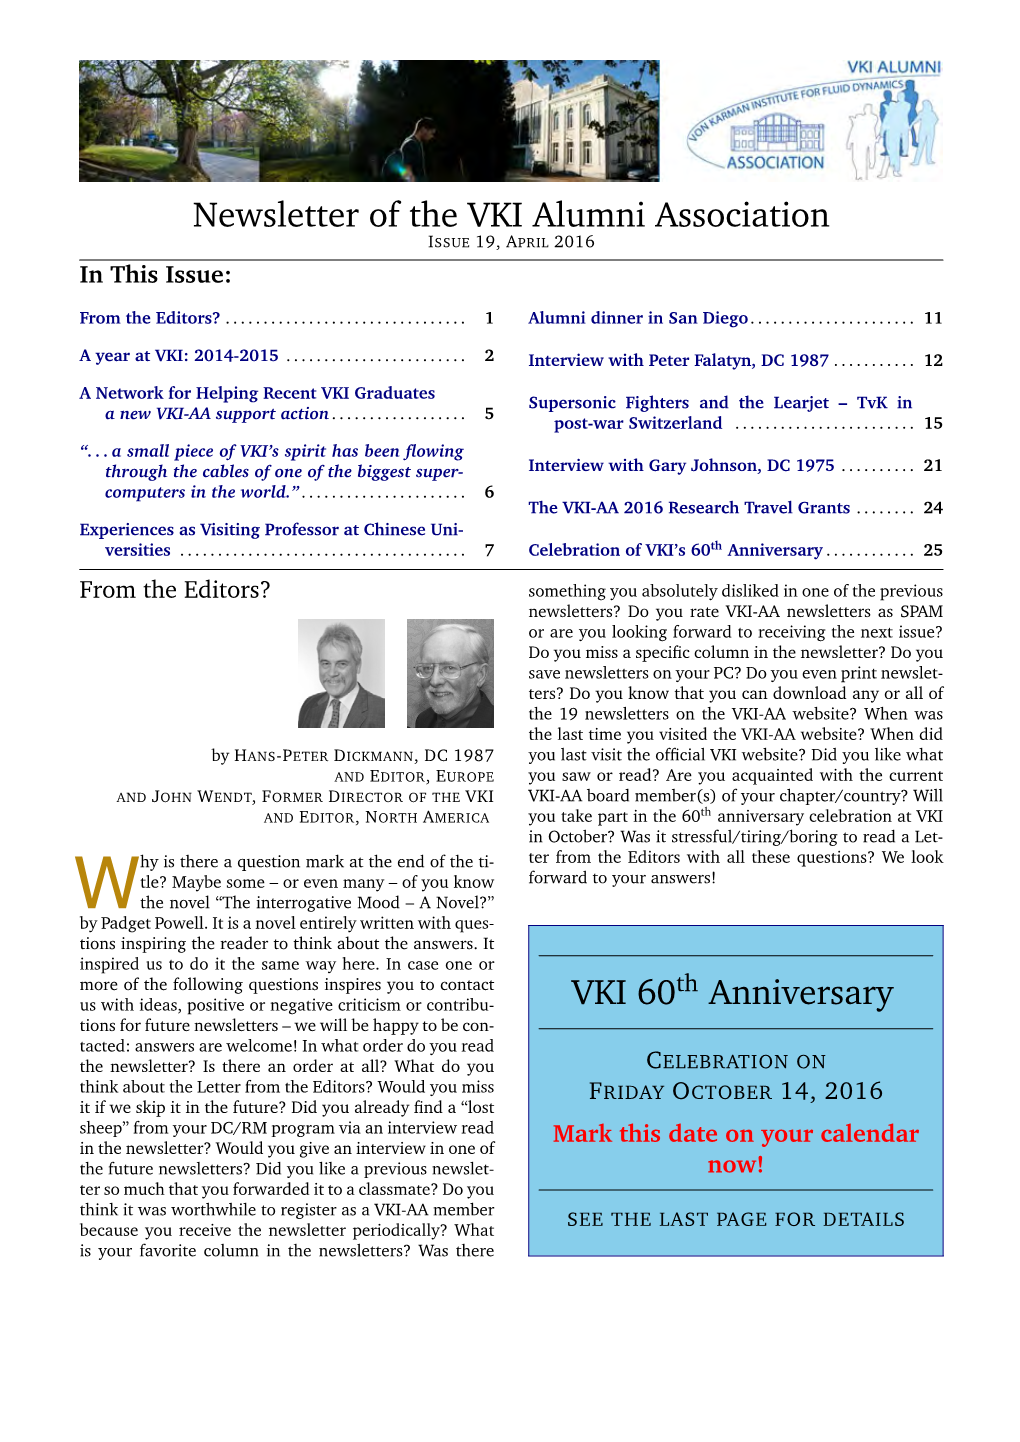 Newsletter of the VKI Alumni Association VKI 60 Anniversary